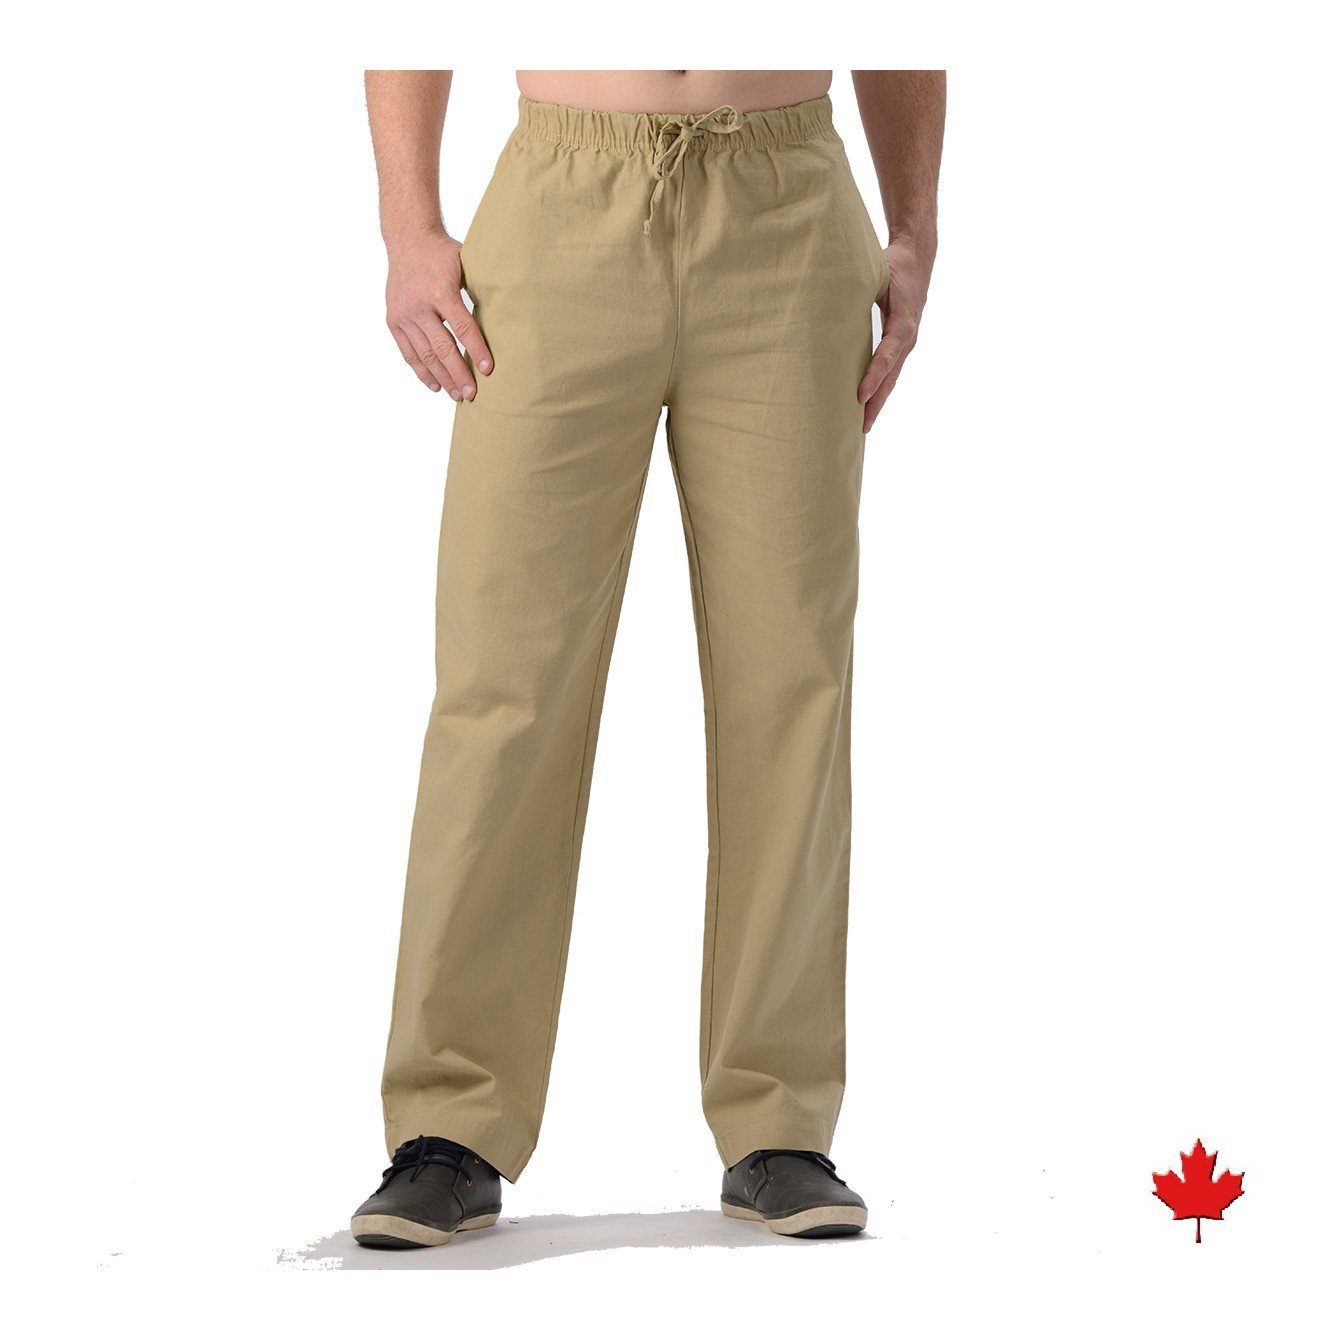 Hemp/Organic Cotton Drawstring Pants - Naturally Canada